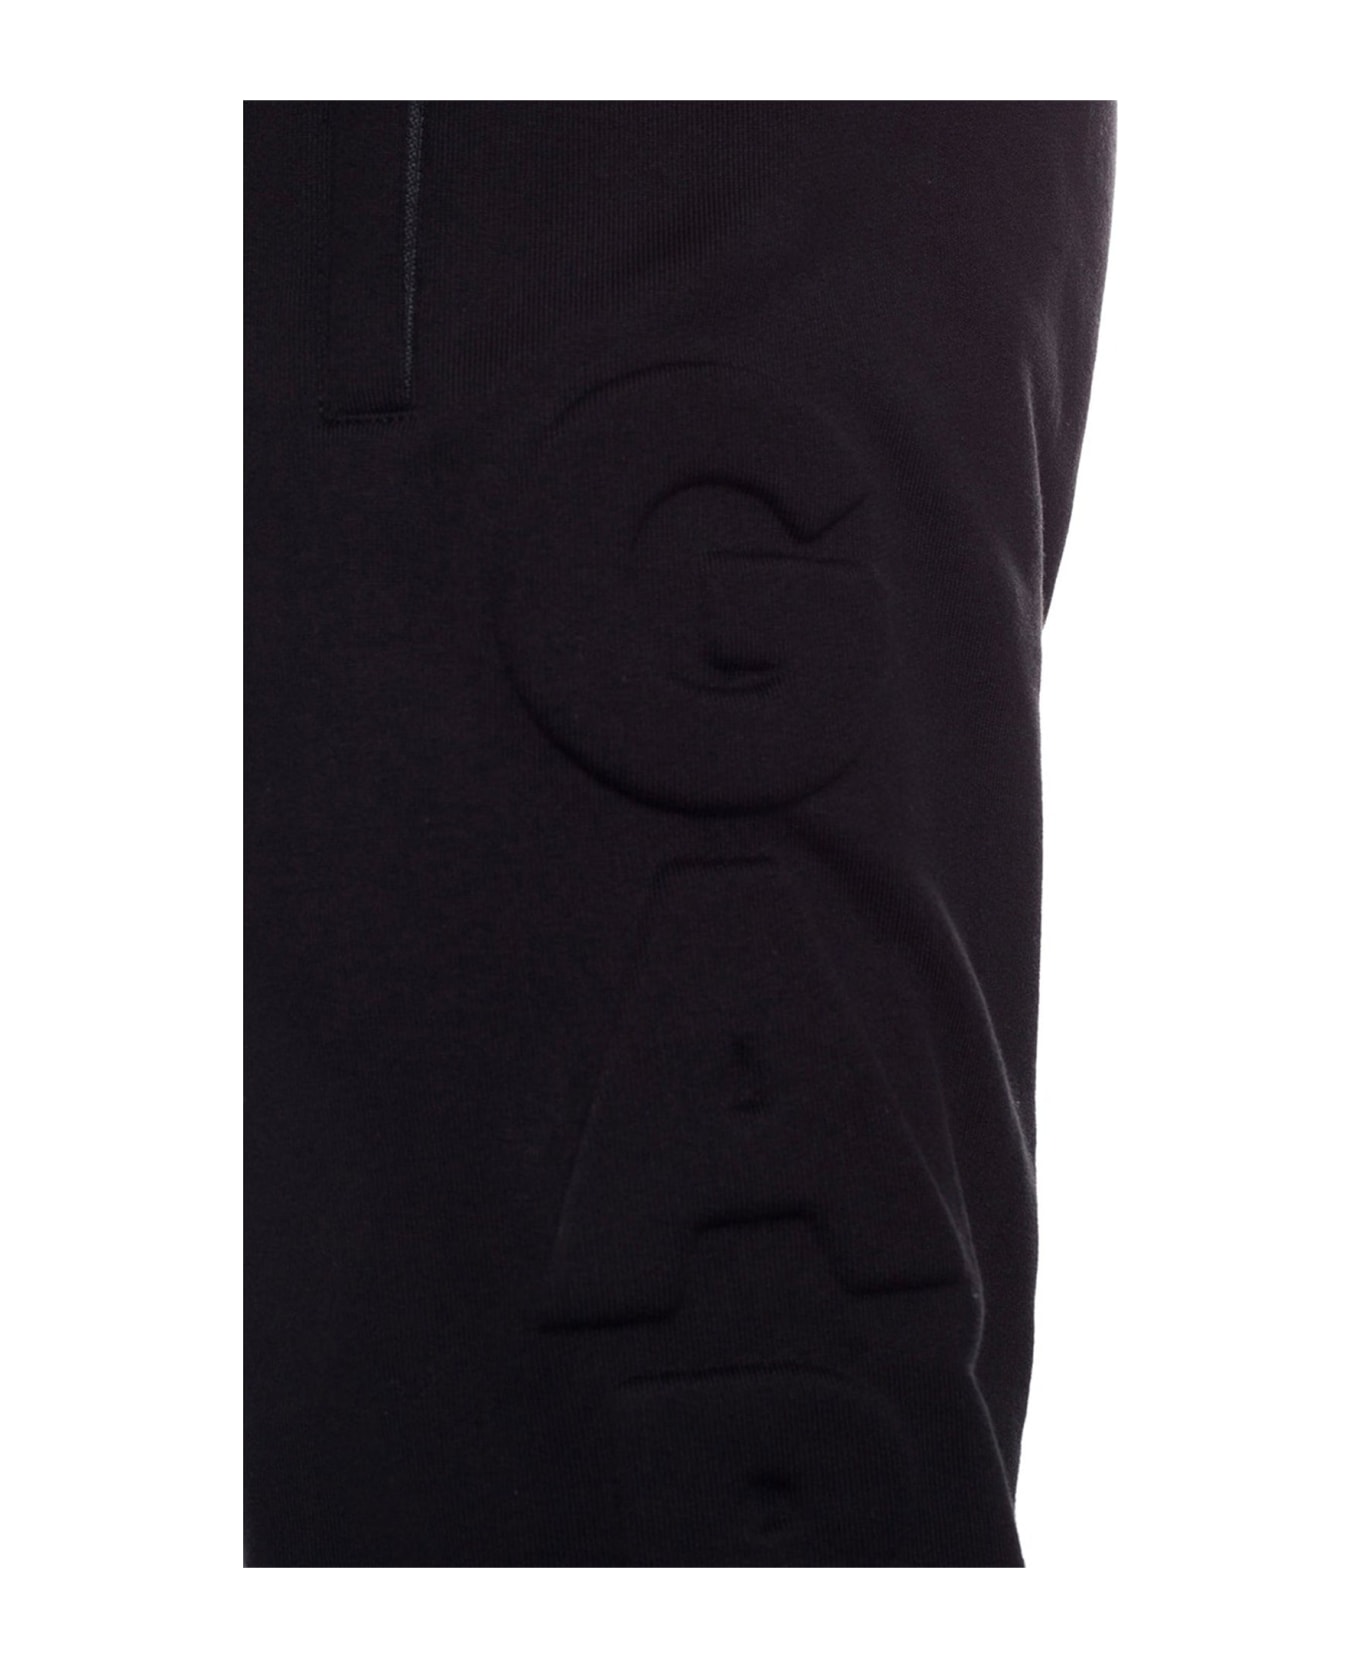 Dolce & Gabbana Cotton Jogging Pants - Black